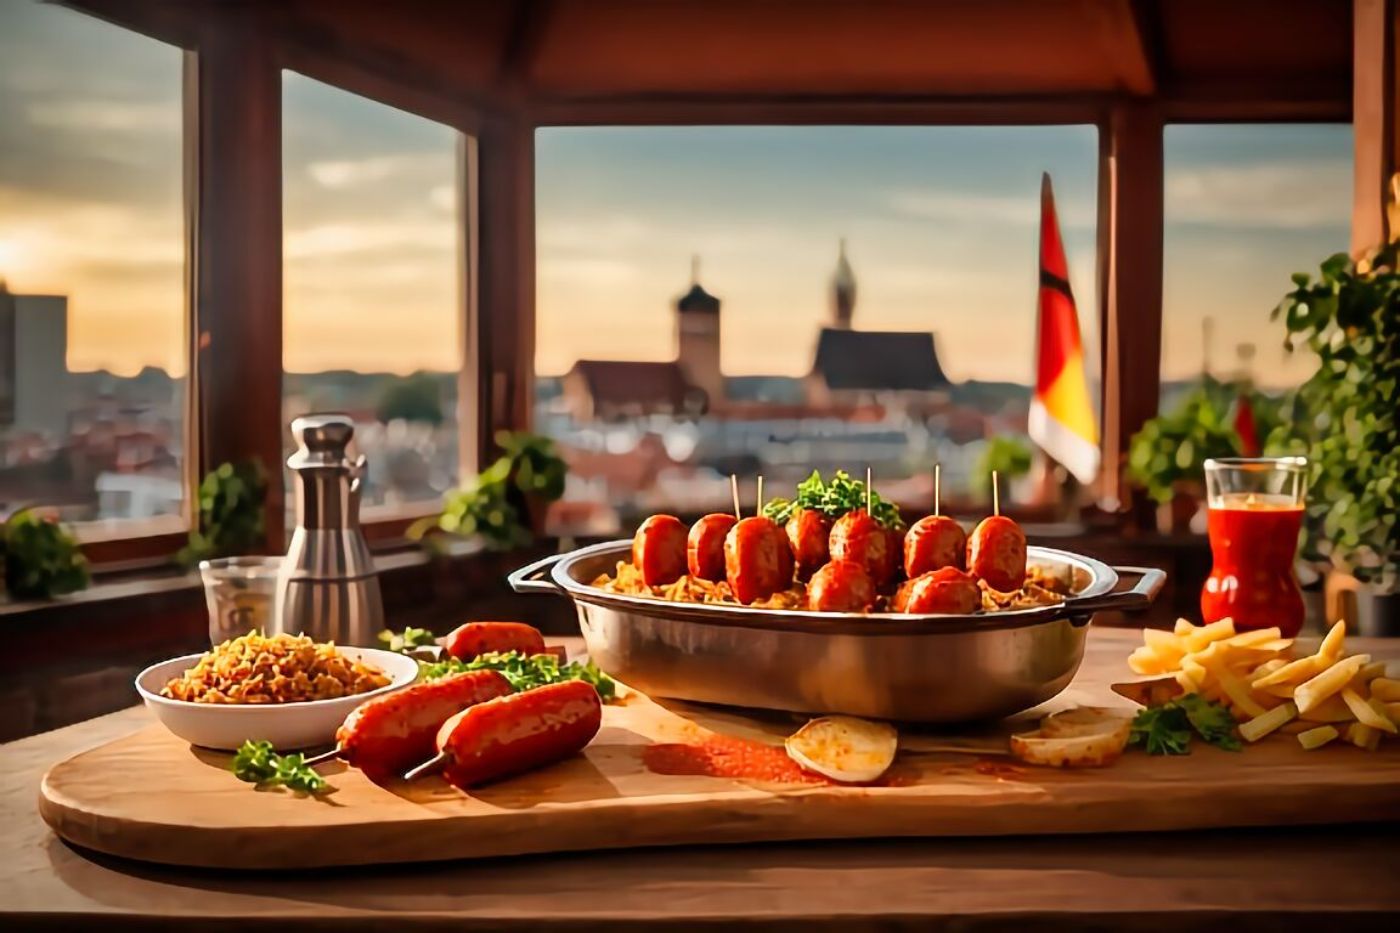 German Currywurst